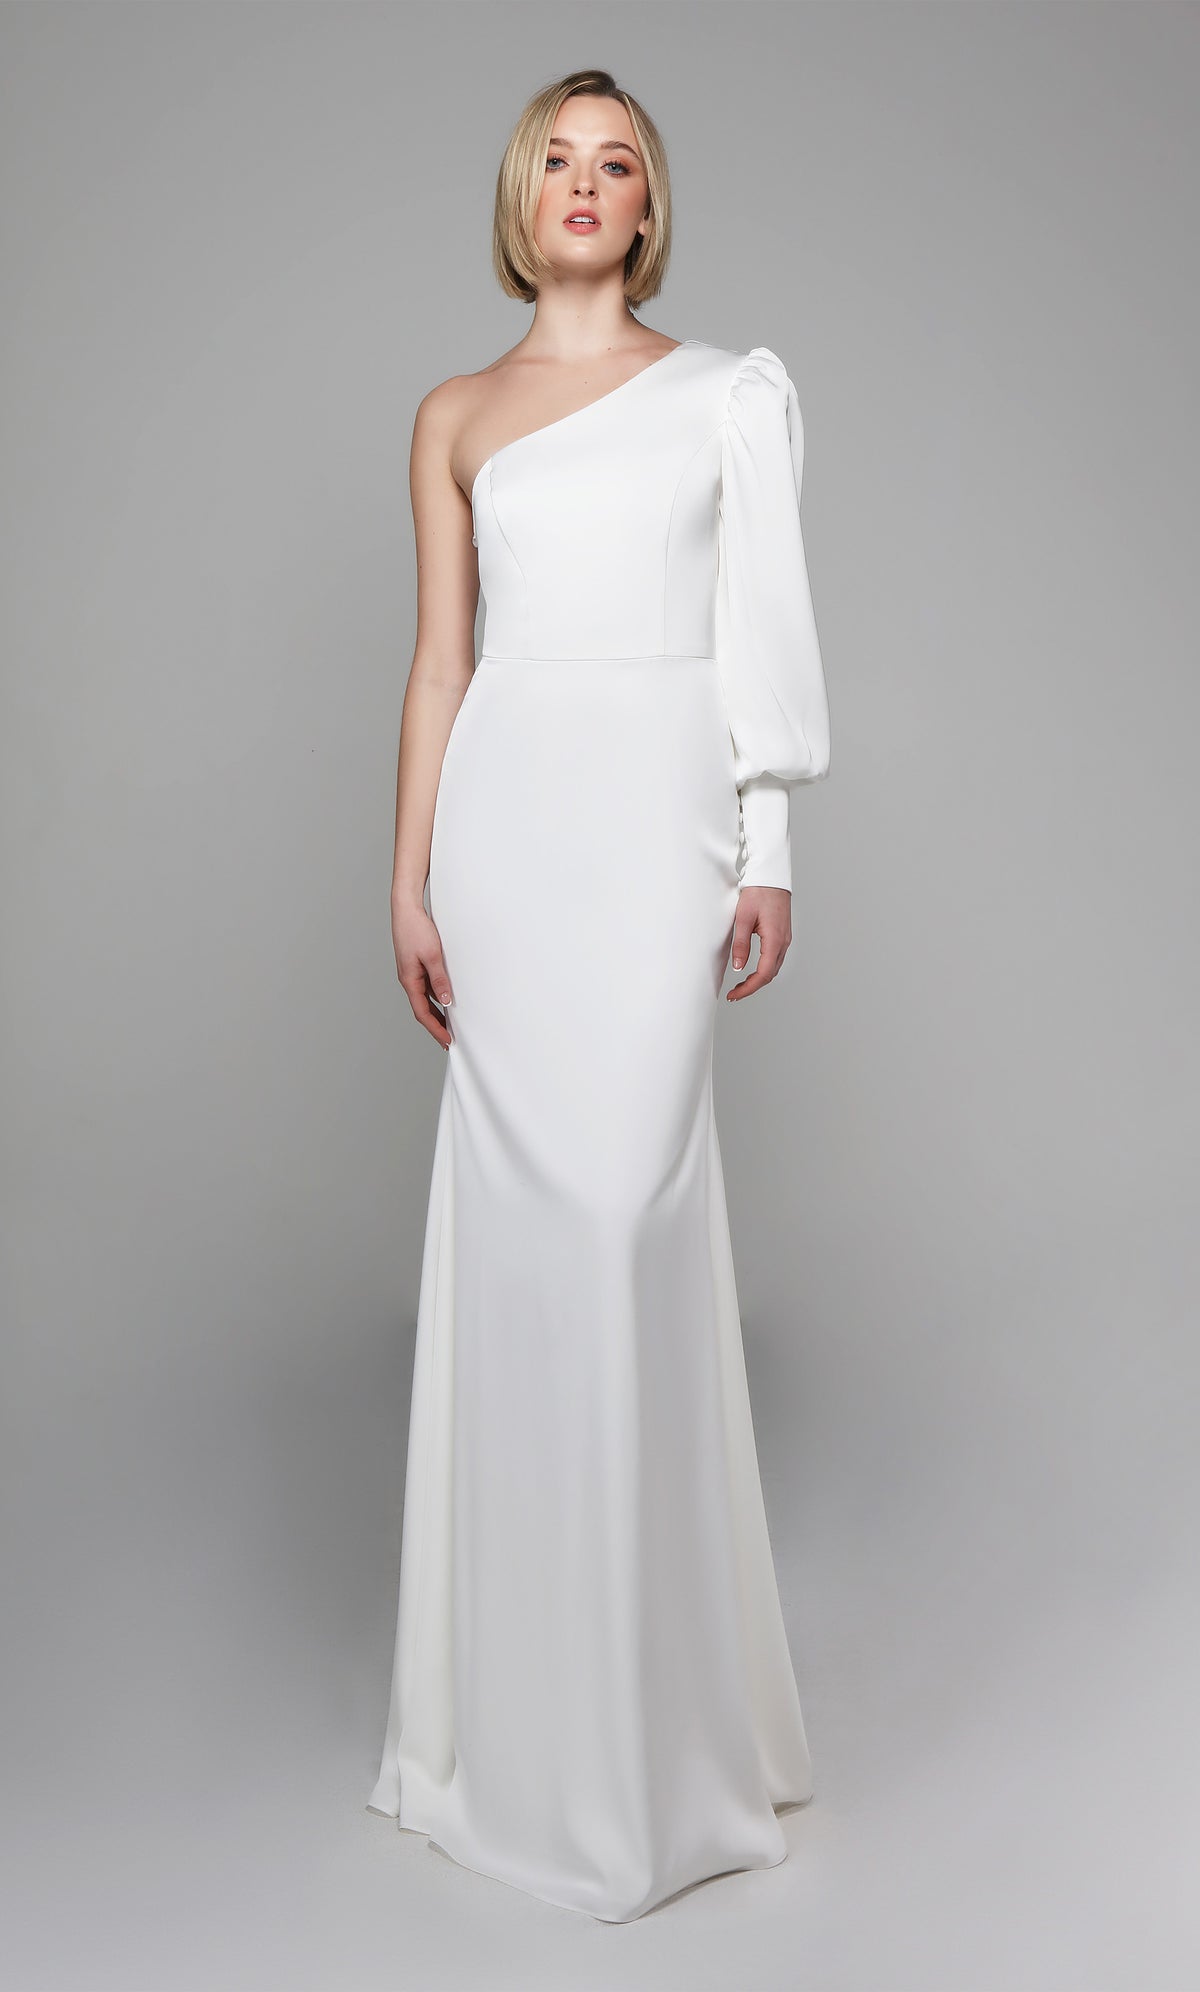 One shoulder wedding dress in ivory.